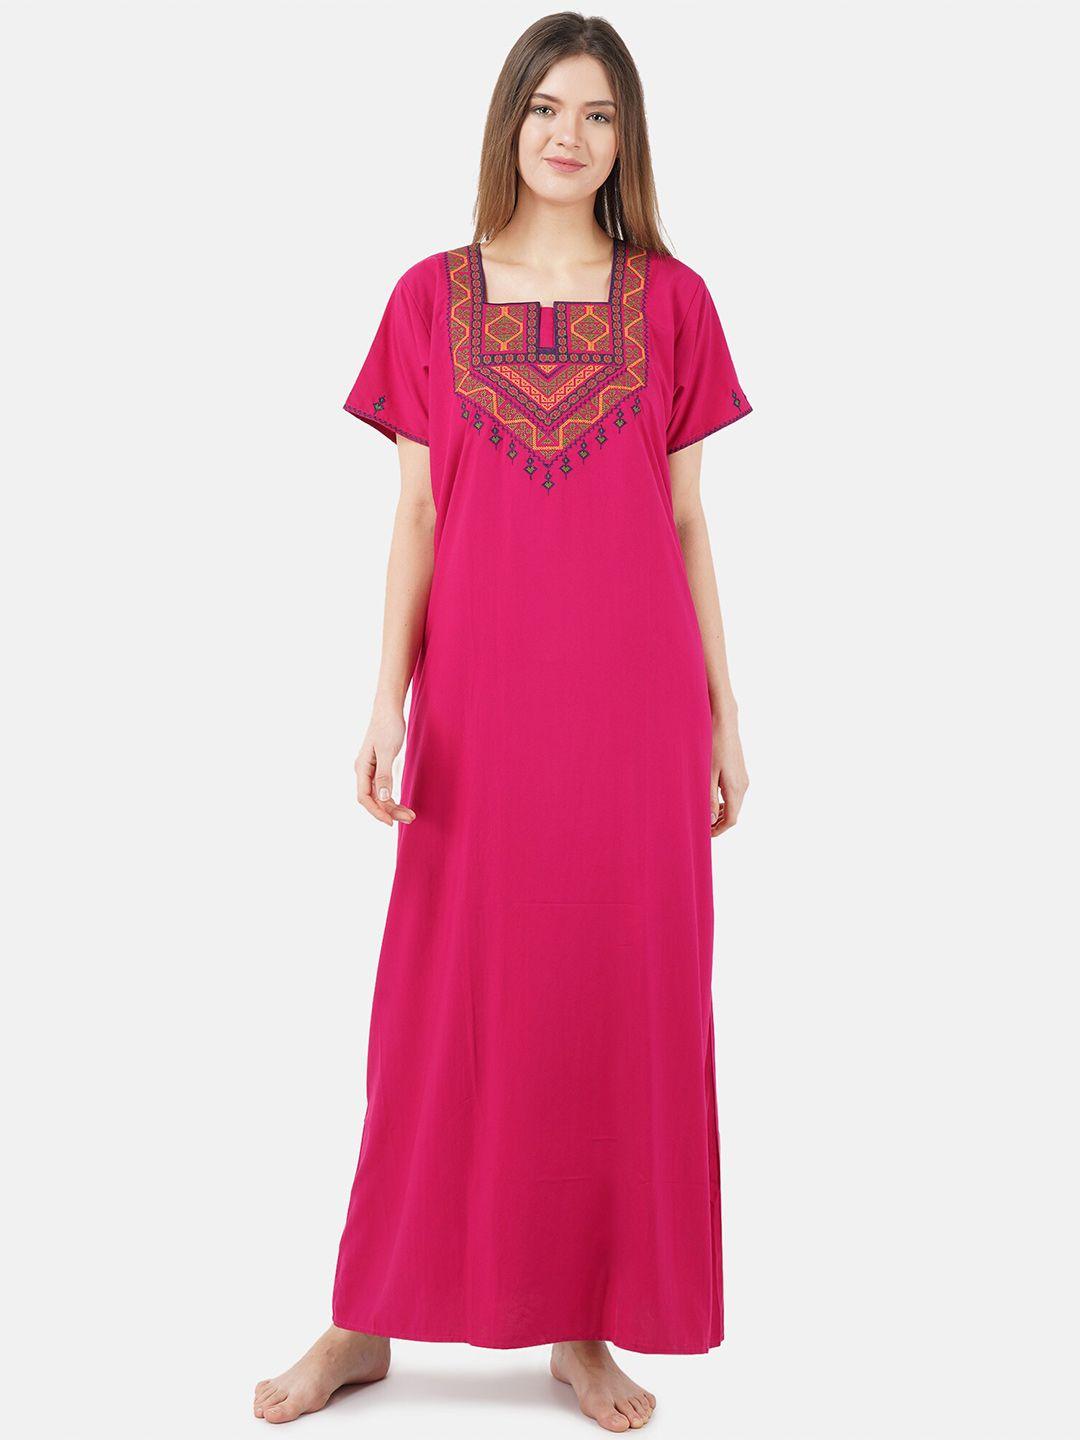 koi sleepwear pink embroidered cotton maxi nightdress